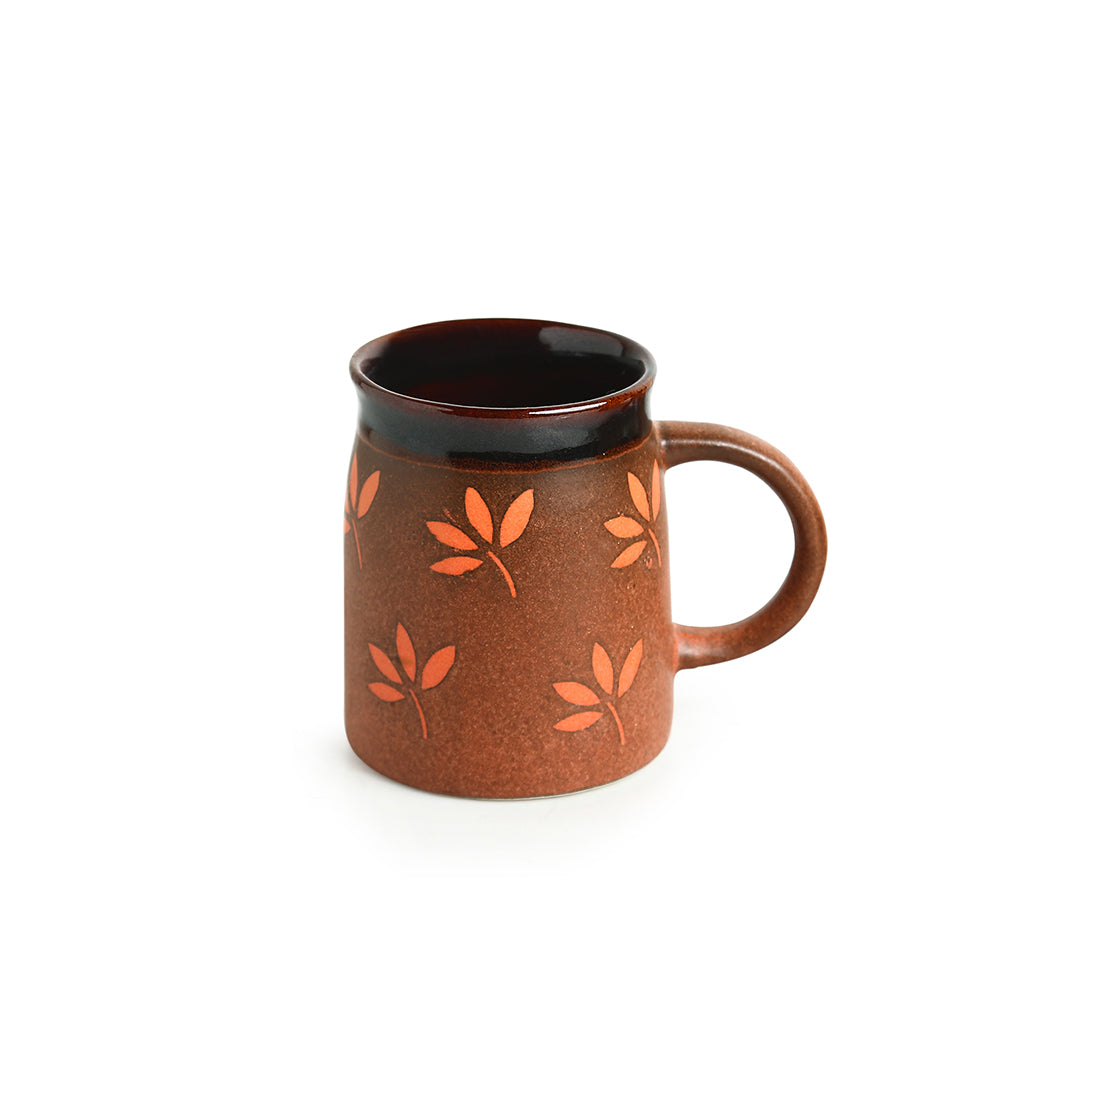 'Leaf Sips' Handpainted & Handglazed Studio Pottery Coffee & Tea Mugs In Ceramic (Set of 2)